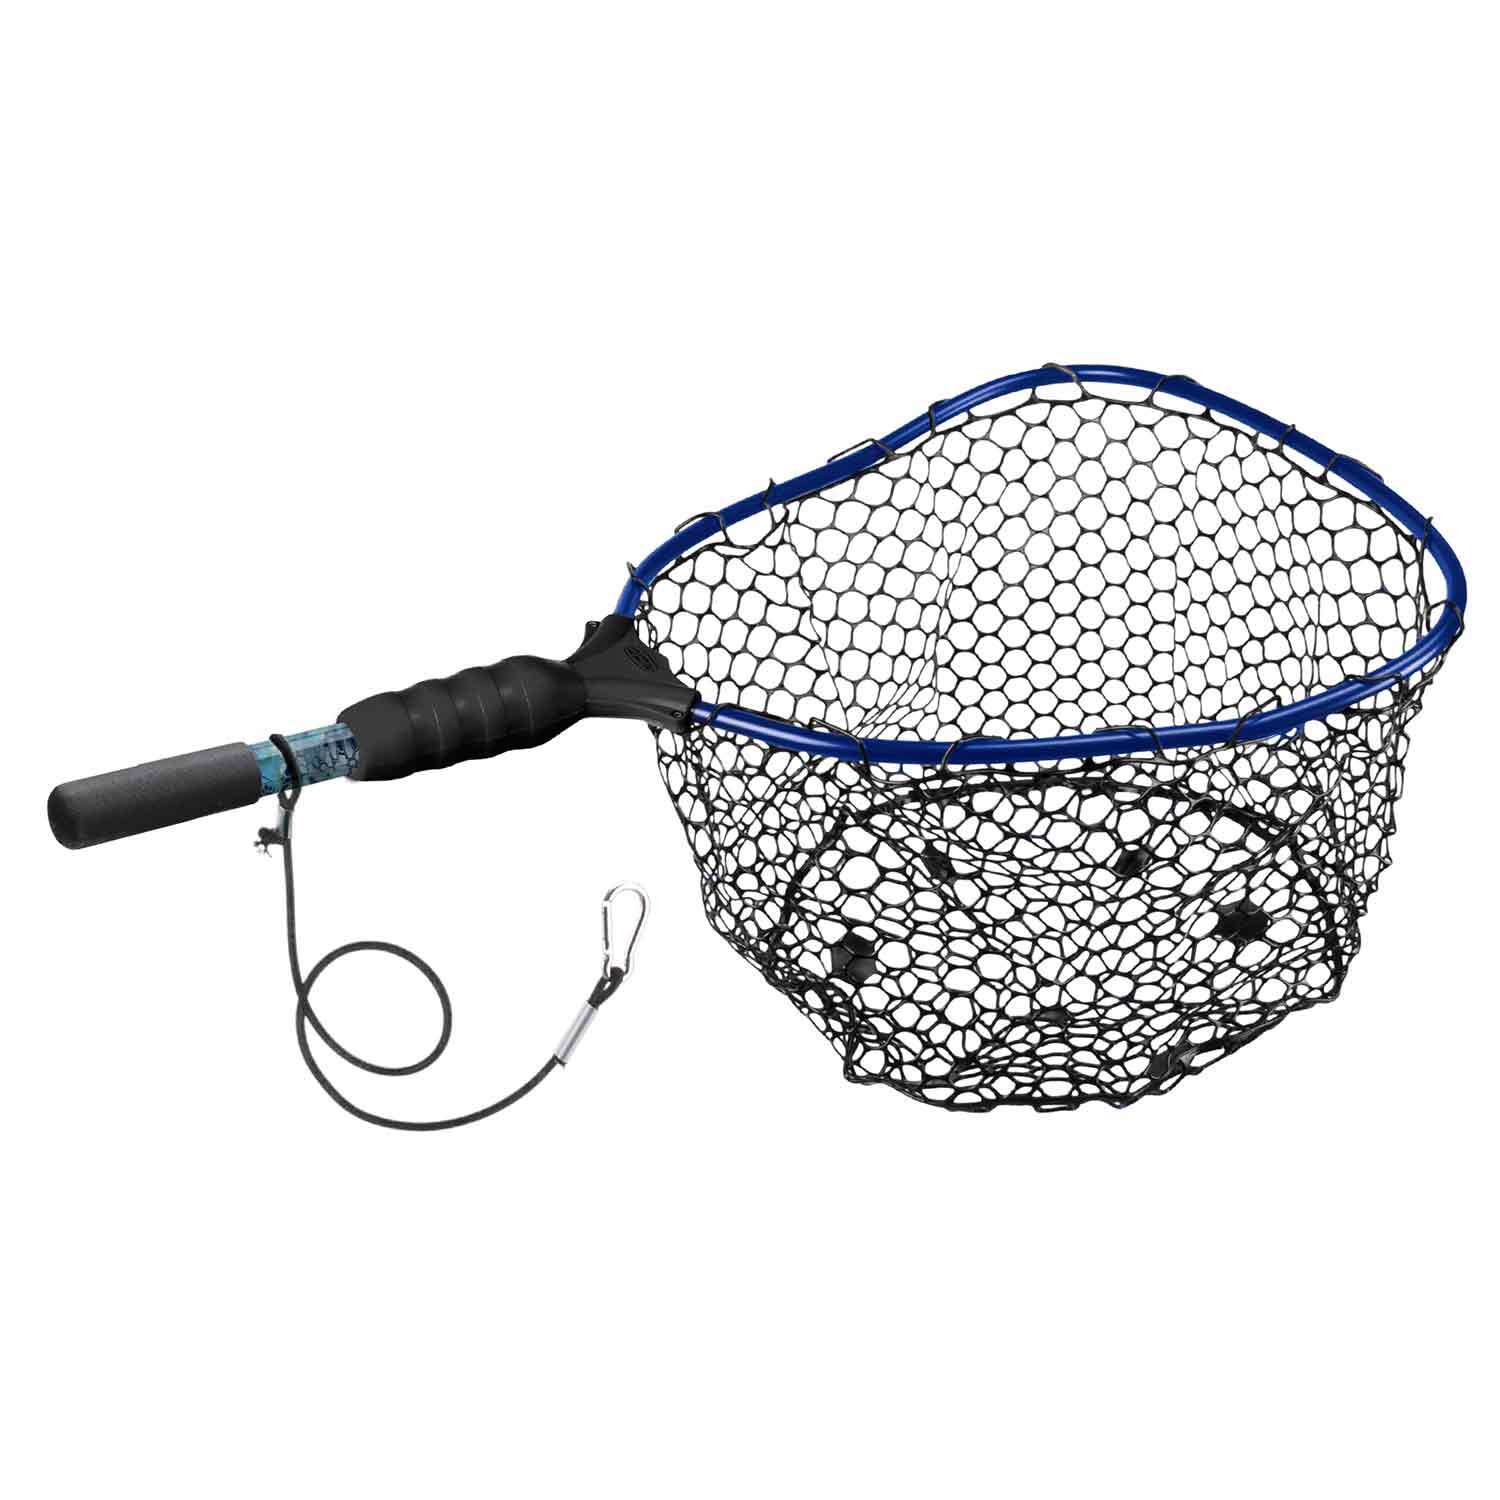 Estink Rubber Portable Rubber Fishing Net, Fishing Landing Net Rubber Fishing Mesh, Fishing Net, For Outside Fishing